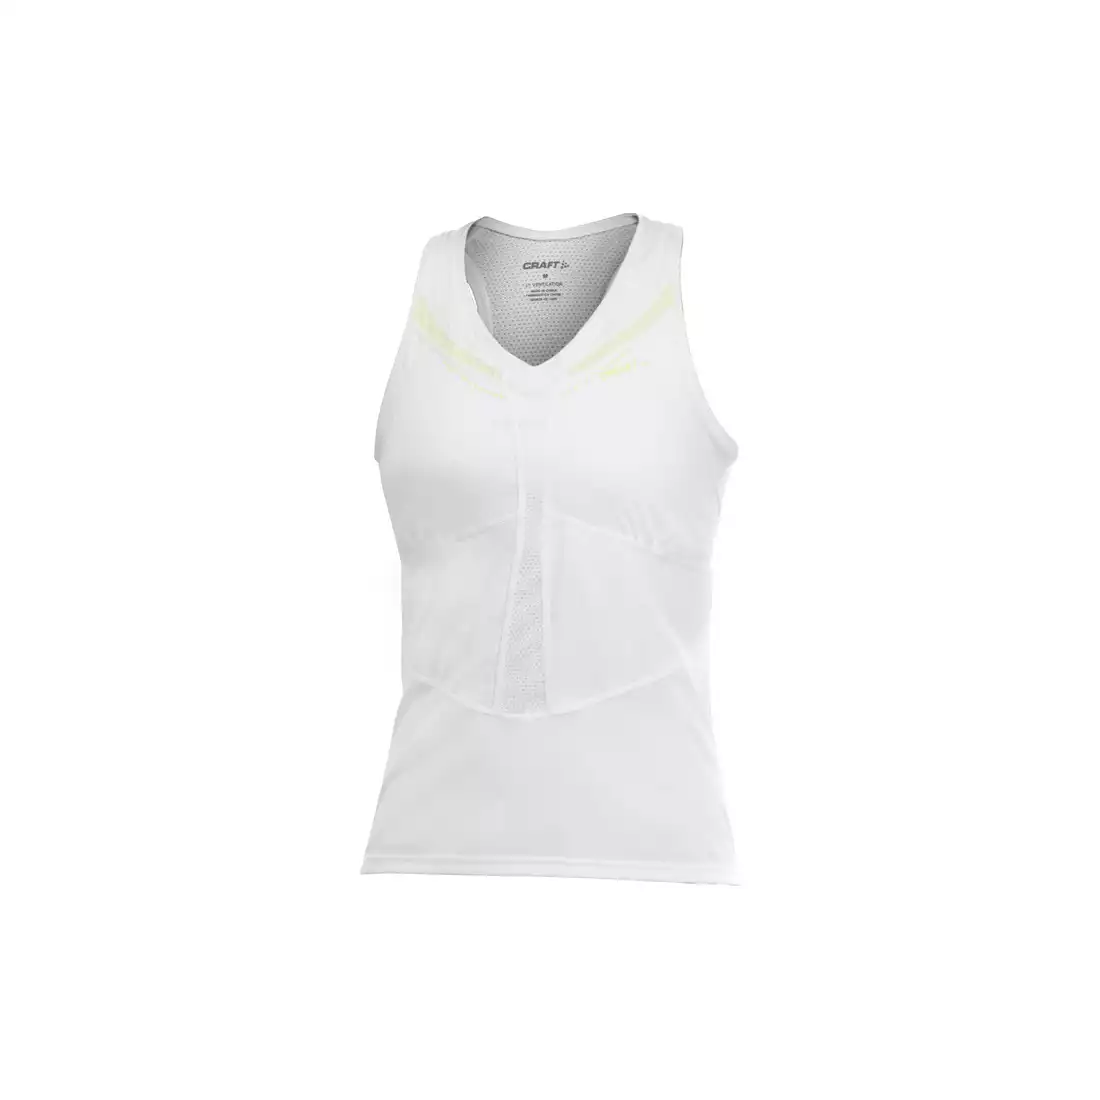 CRAFT PERFORMANCE - damska koszulka do biegania, na ramiączkach 1900634-2900